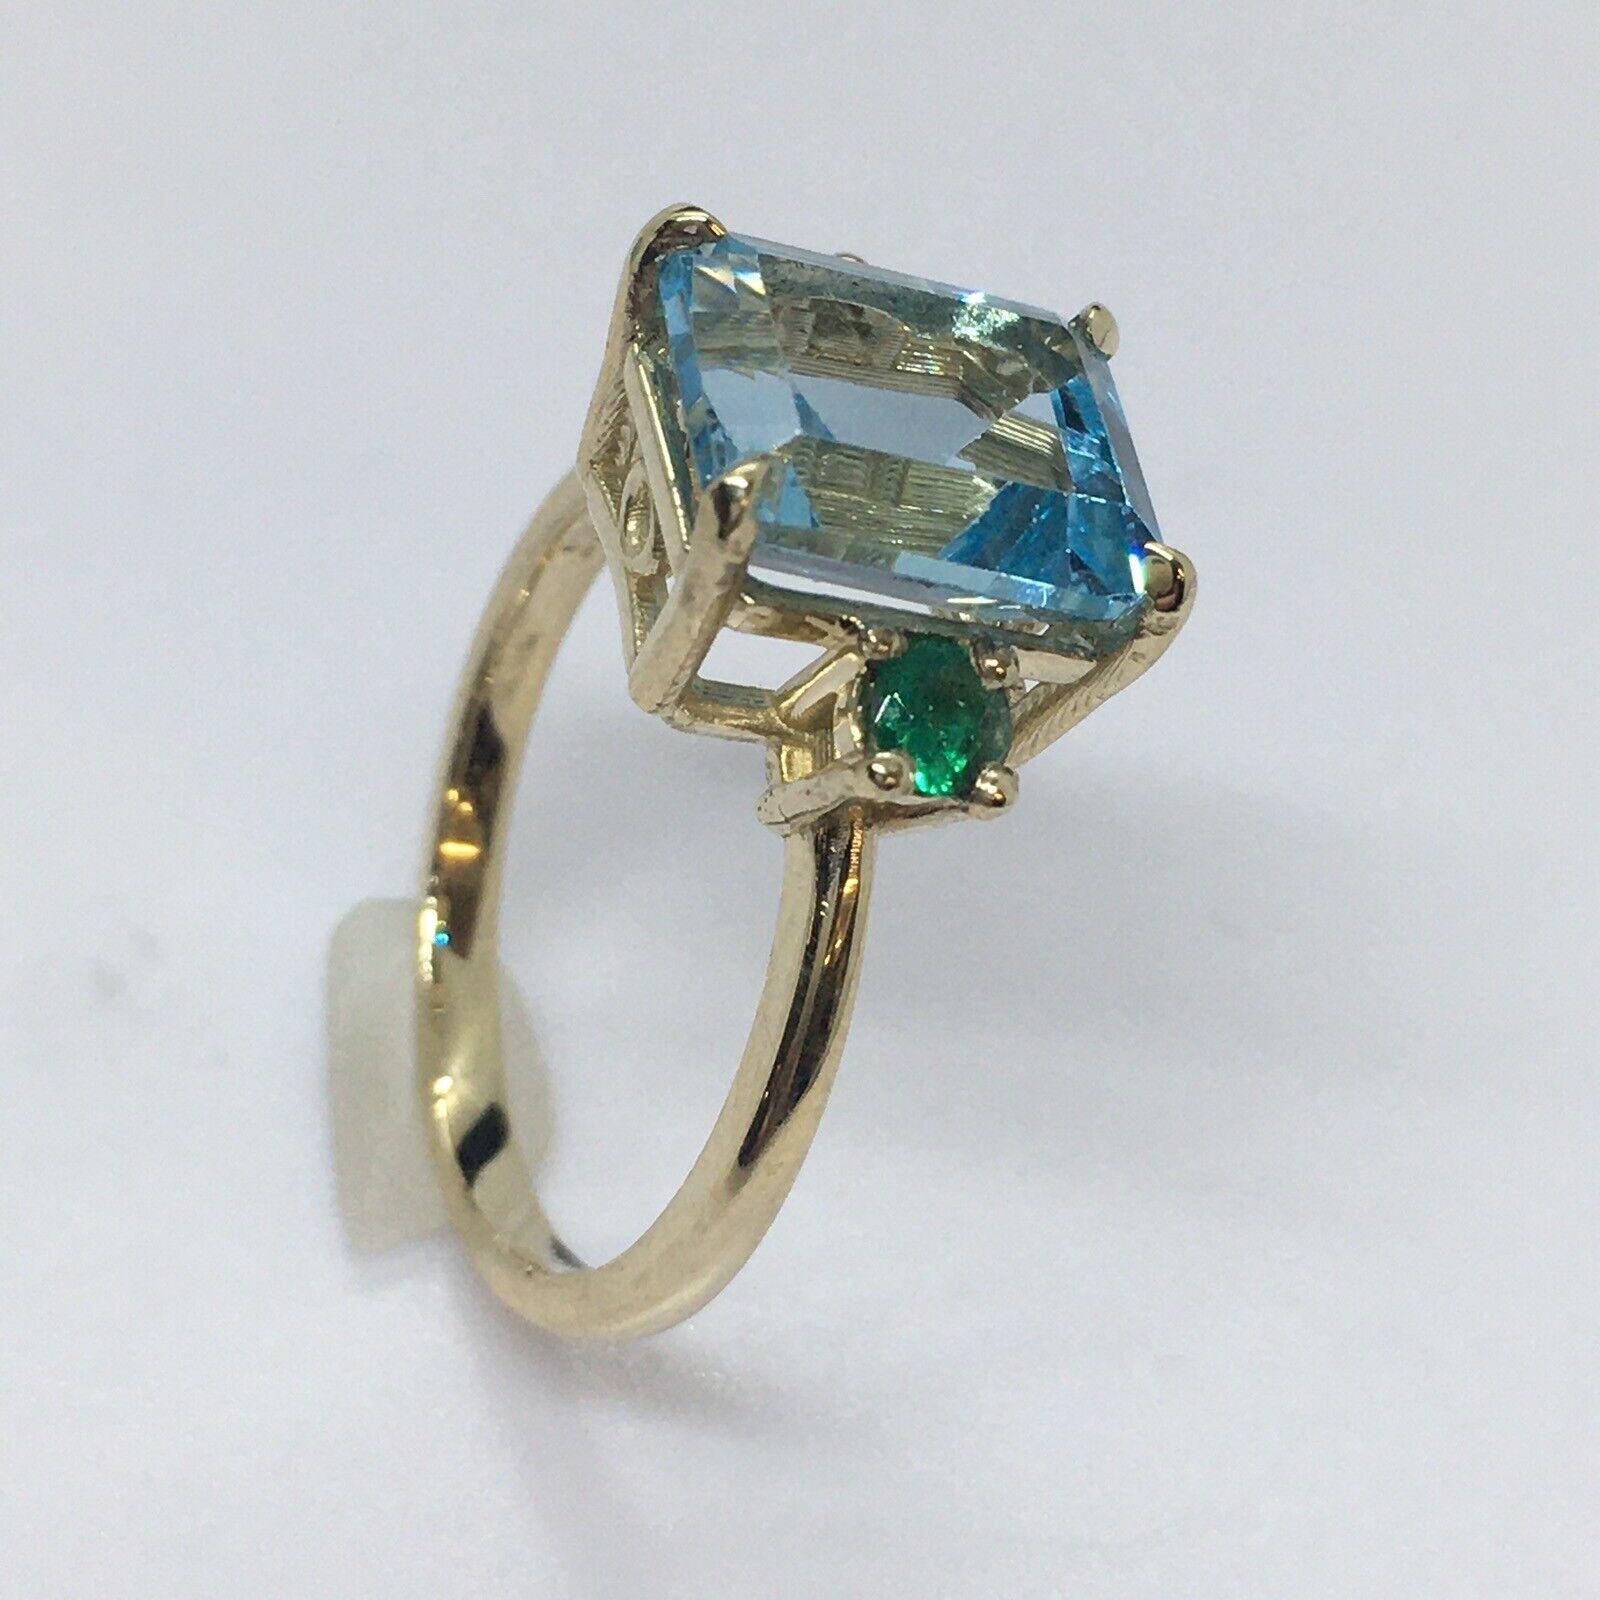 Emerald Cut Santa Maria Hue Natural Aquamarine Emerald Beryl Stone Trio Ring 14K Gold Size 7 For Sale